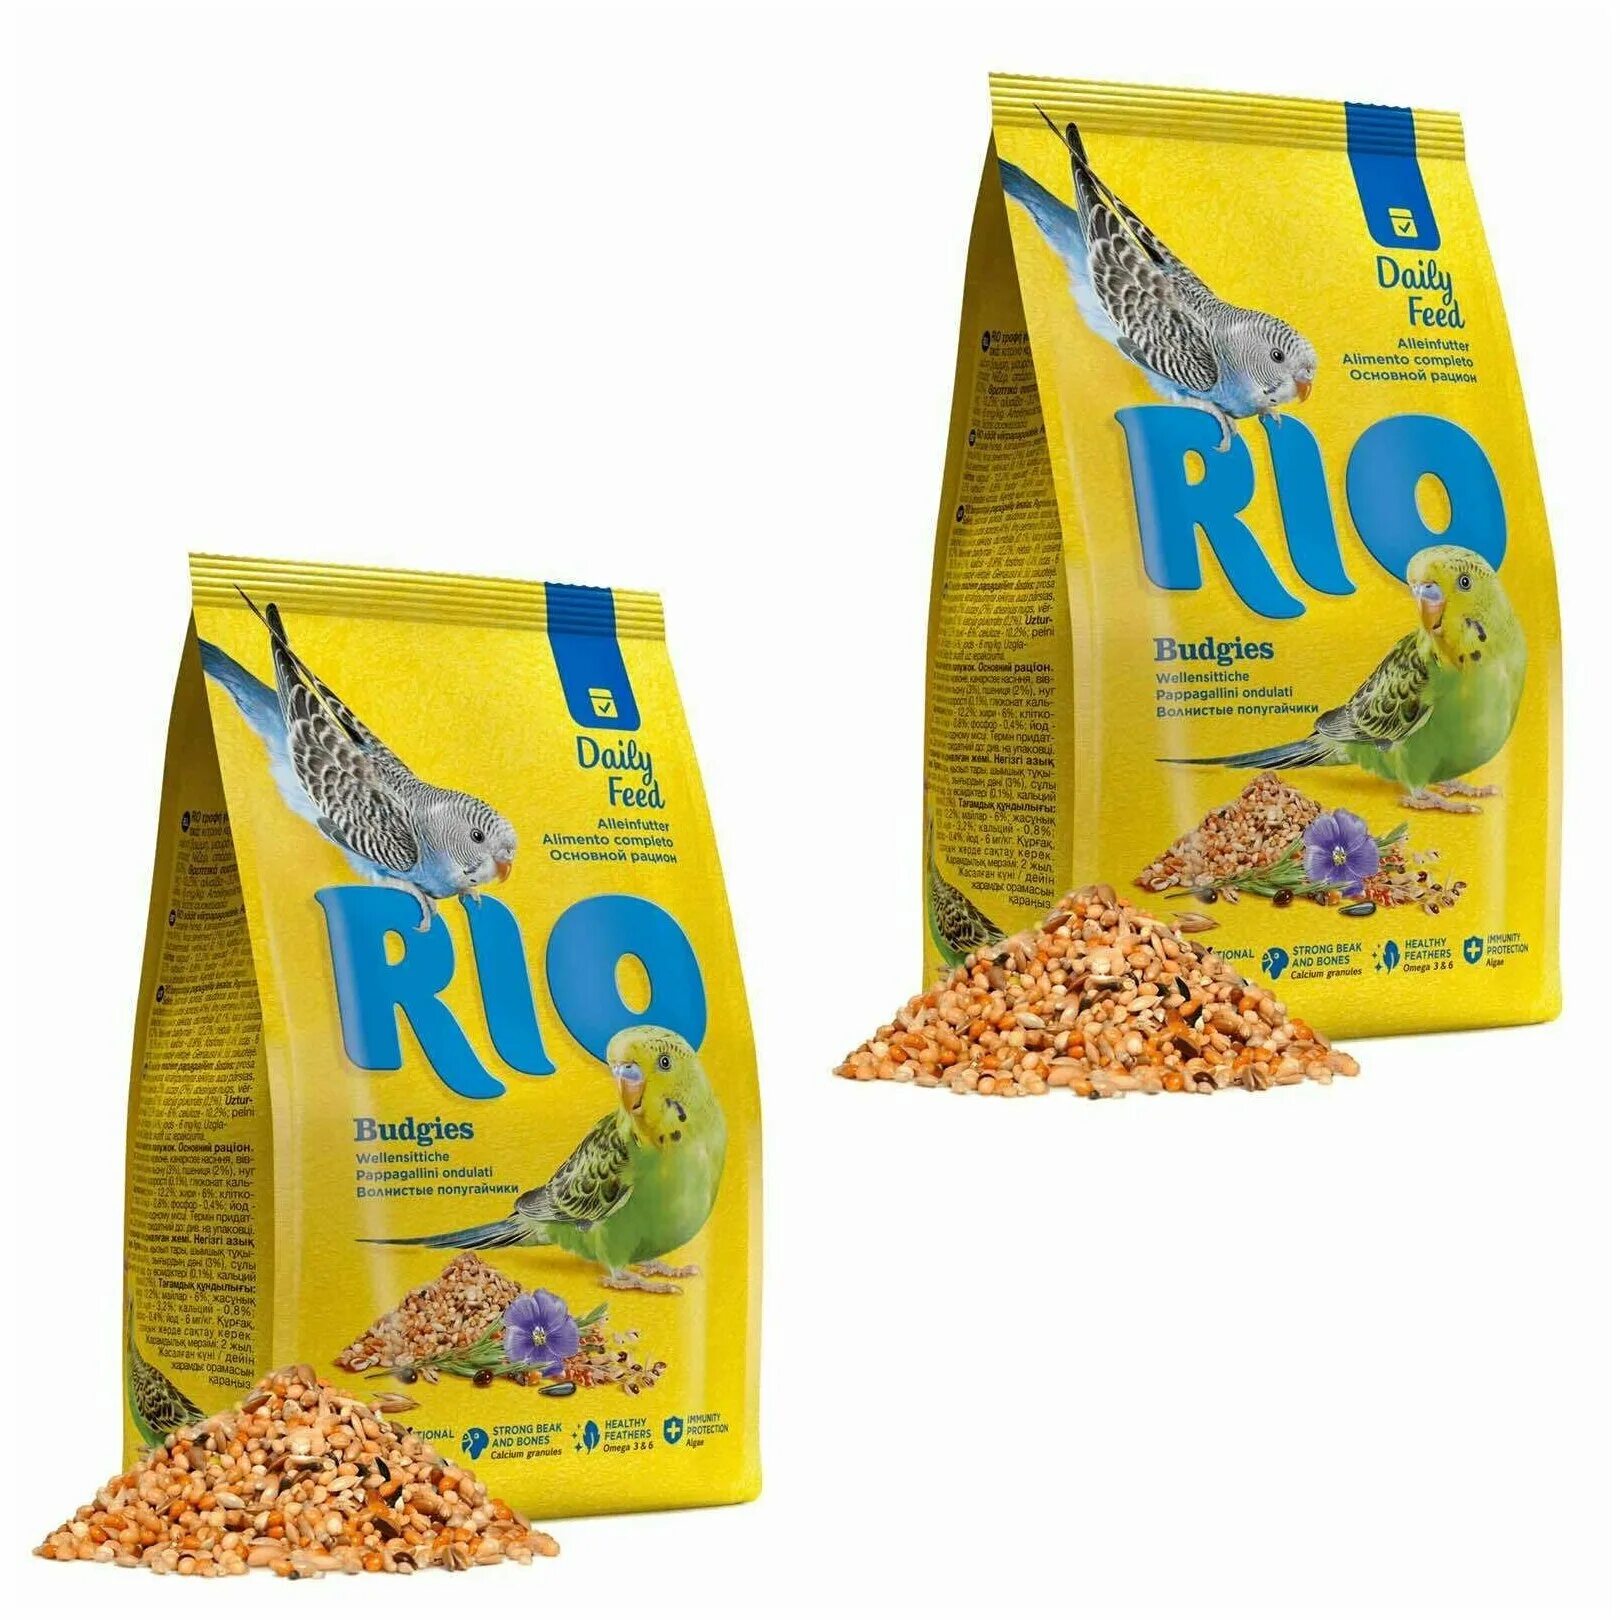 Рио корм для волнистых попугаев основной 500 г. Рио корм для волнистых попугайчиков 2 упаковки 500 грамм. Корм Рио для волнистых попугаев основной рацион. Рио корм для волнистых попугайчиков основной.